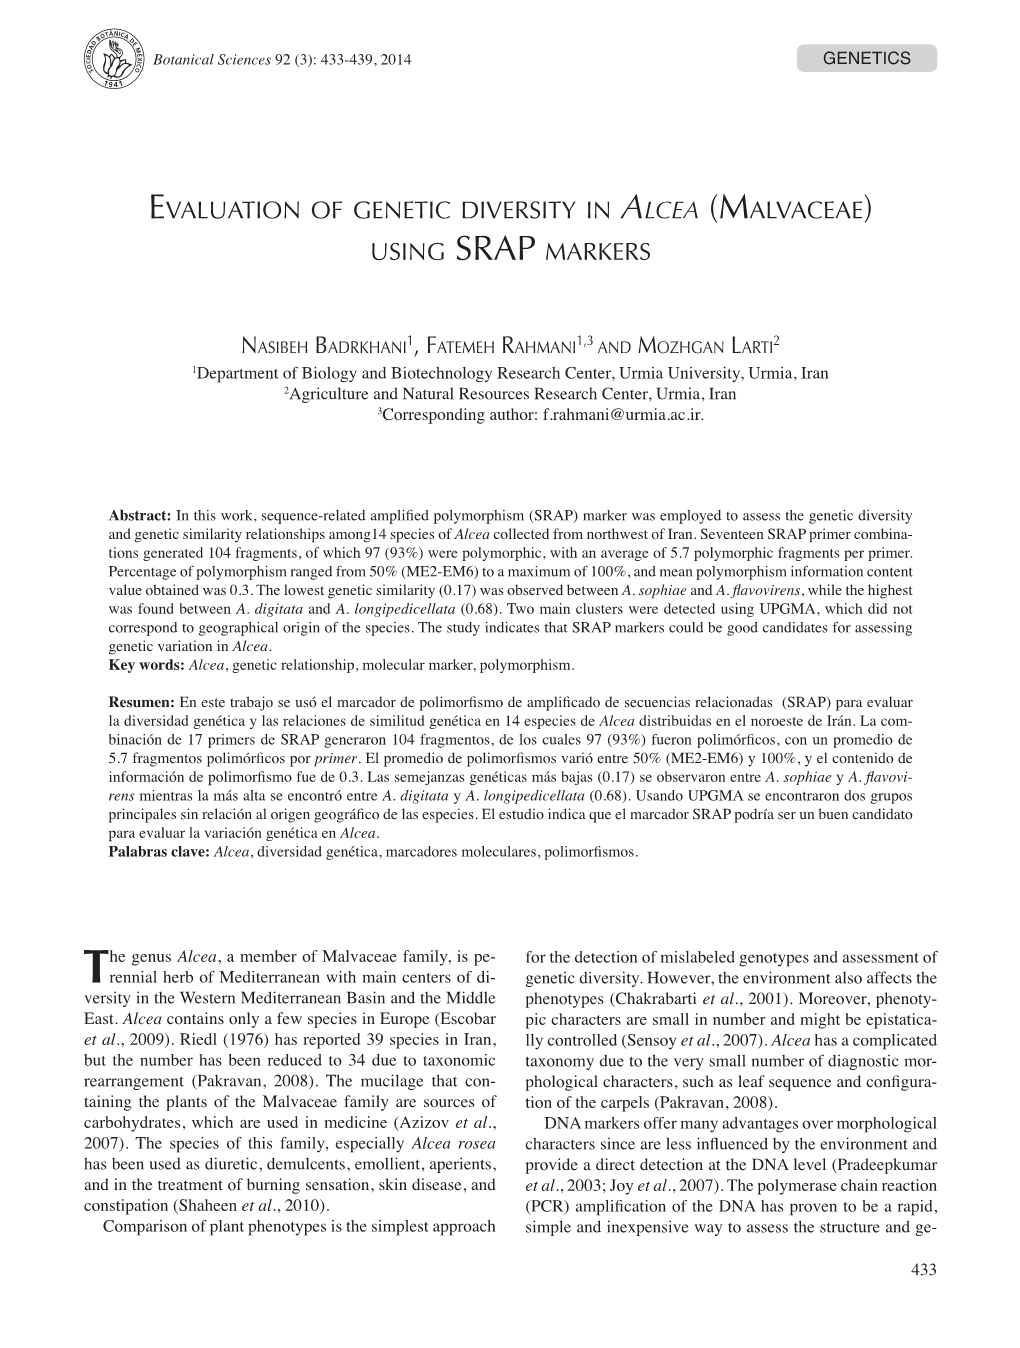 Evaluation of Genetic Diversity in Alcea (Malvaceae) Using Srap Markers